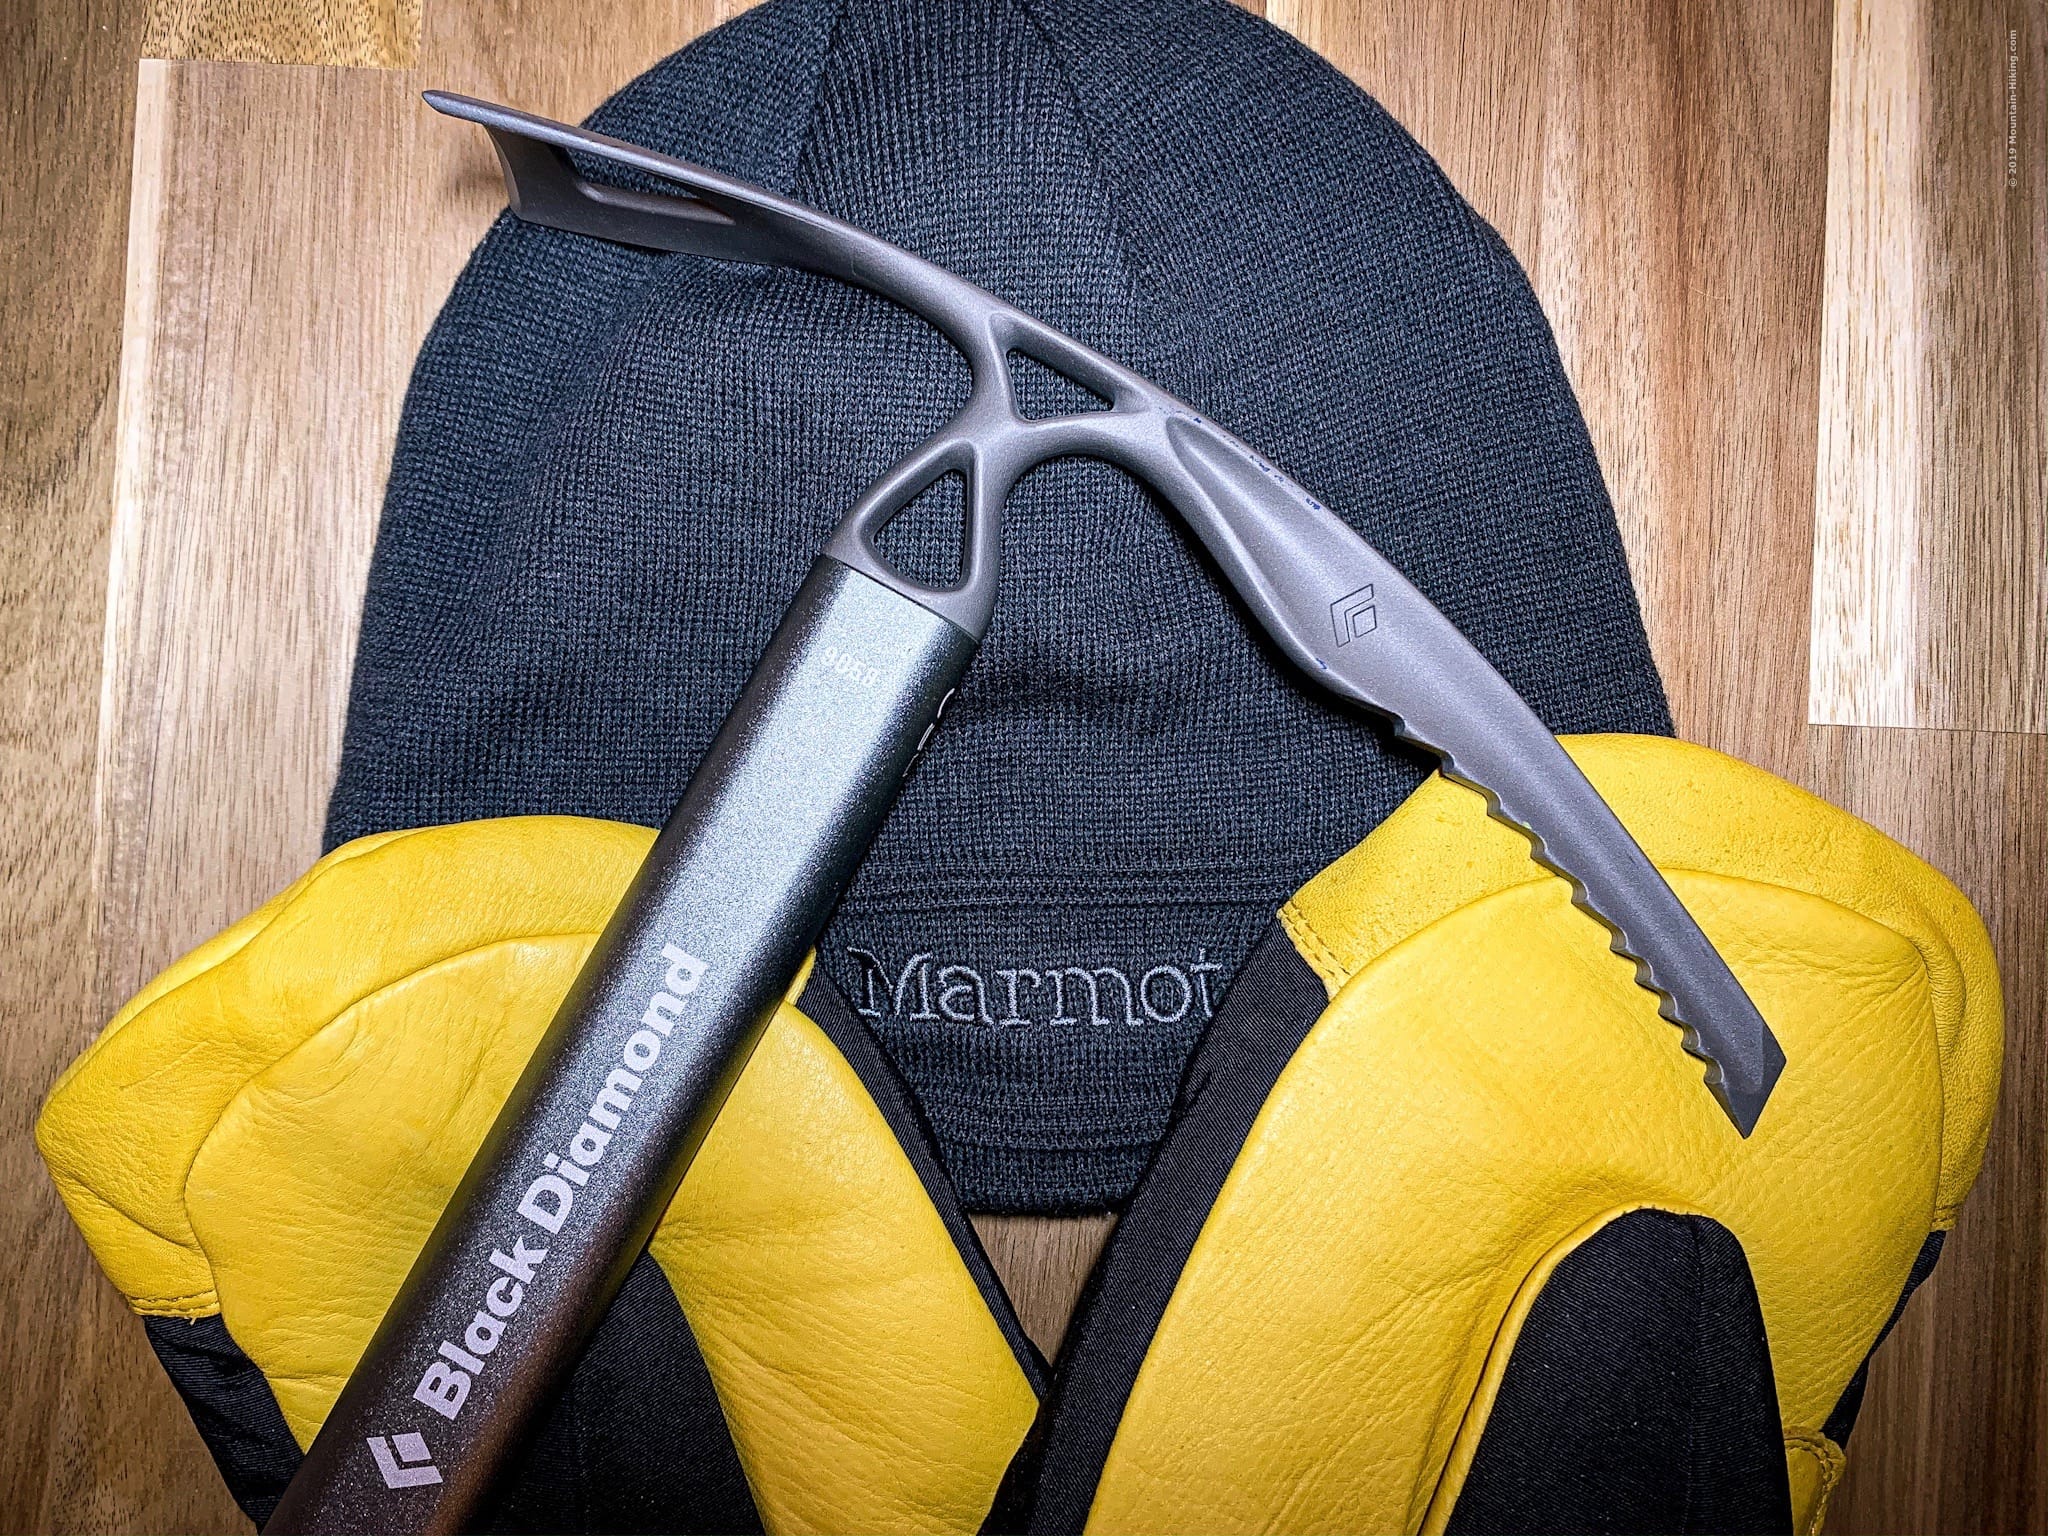 Winter Hiking Gear: hat, gloves, ice axe